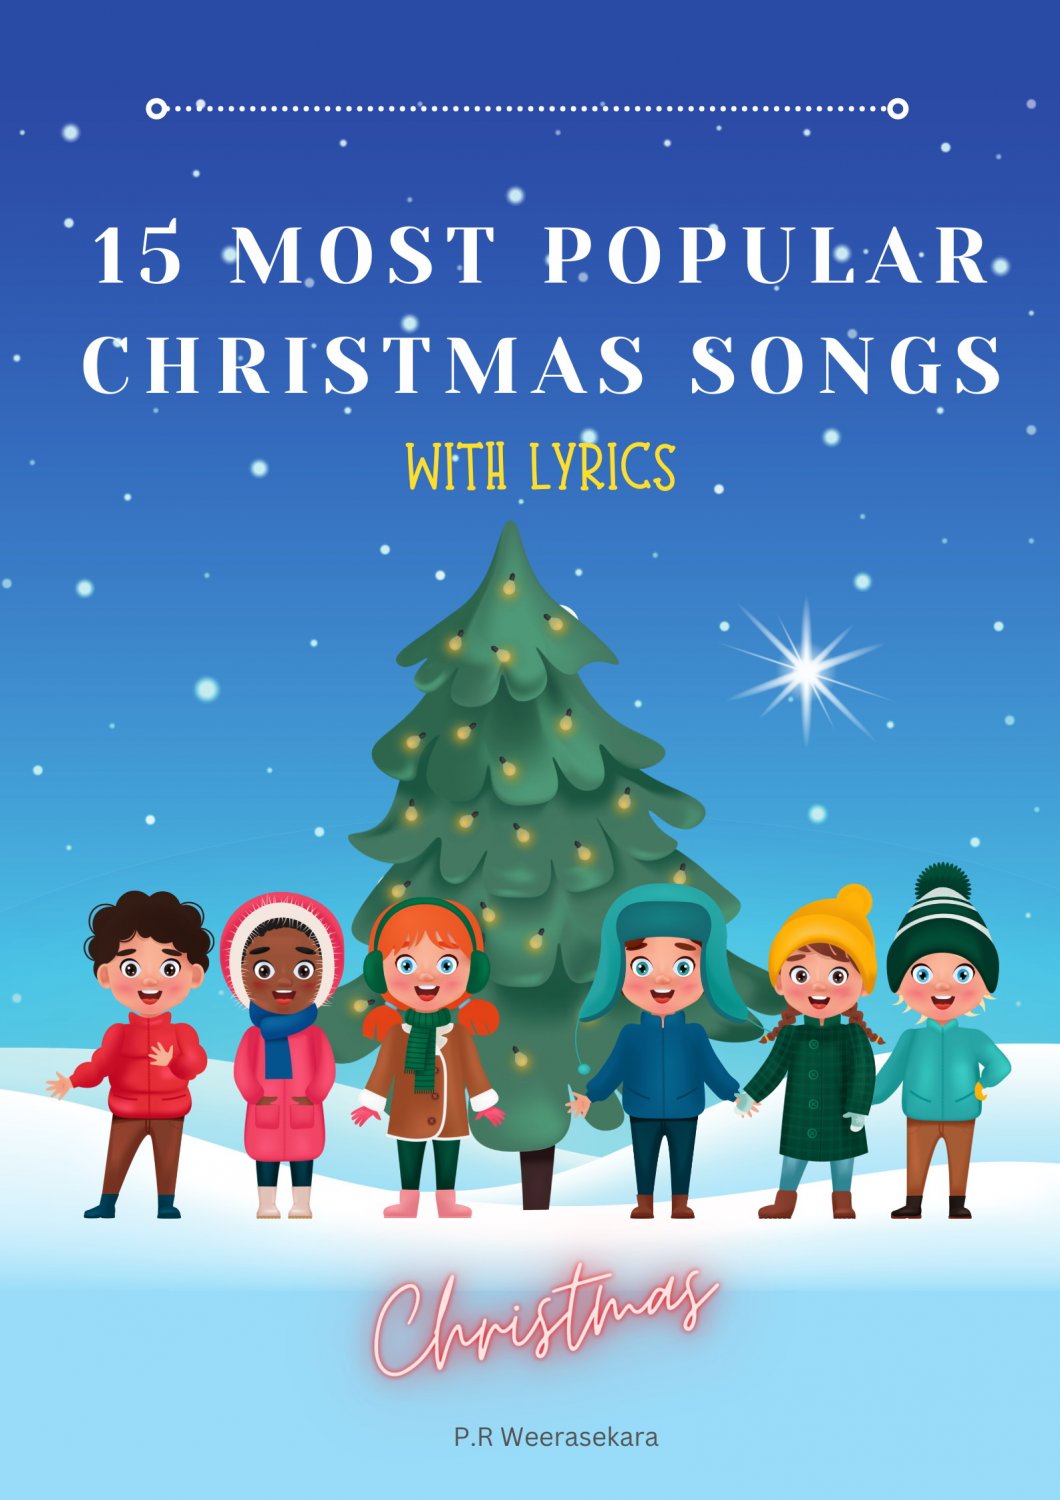 15 Most Popular Christmas Songs With Lyrics